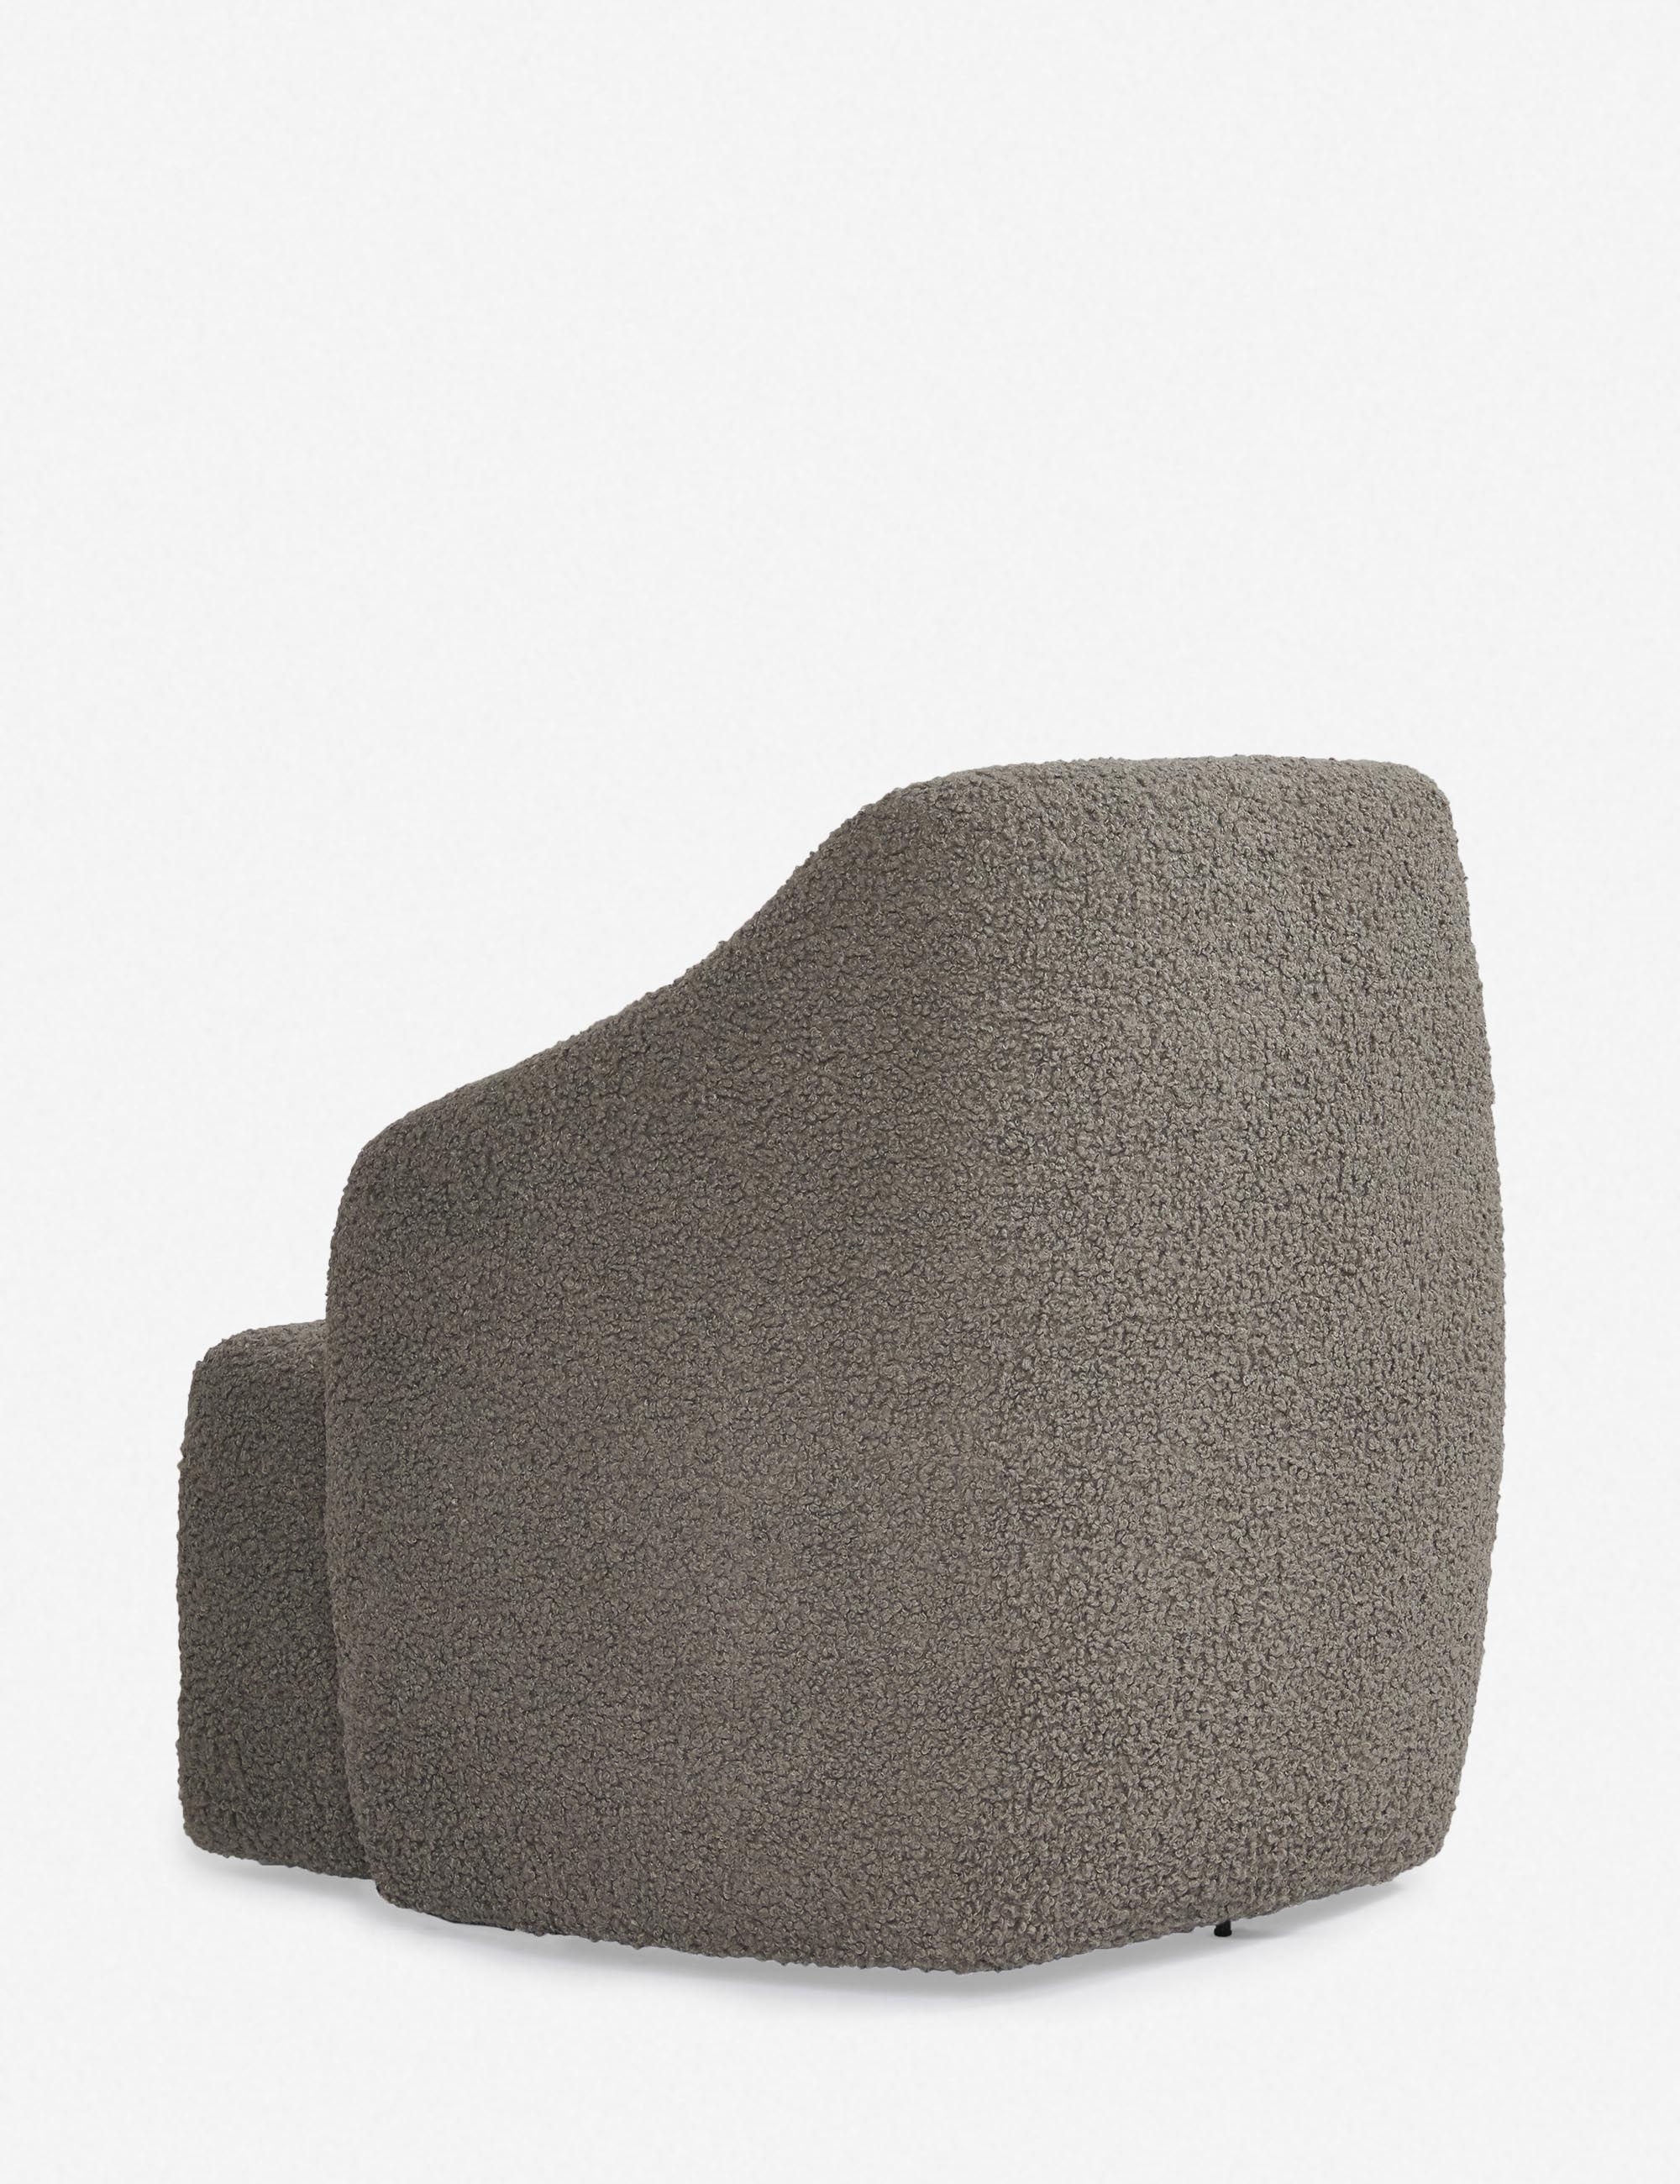 Tobi Swivel Chair - Image 4